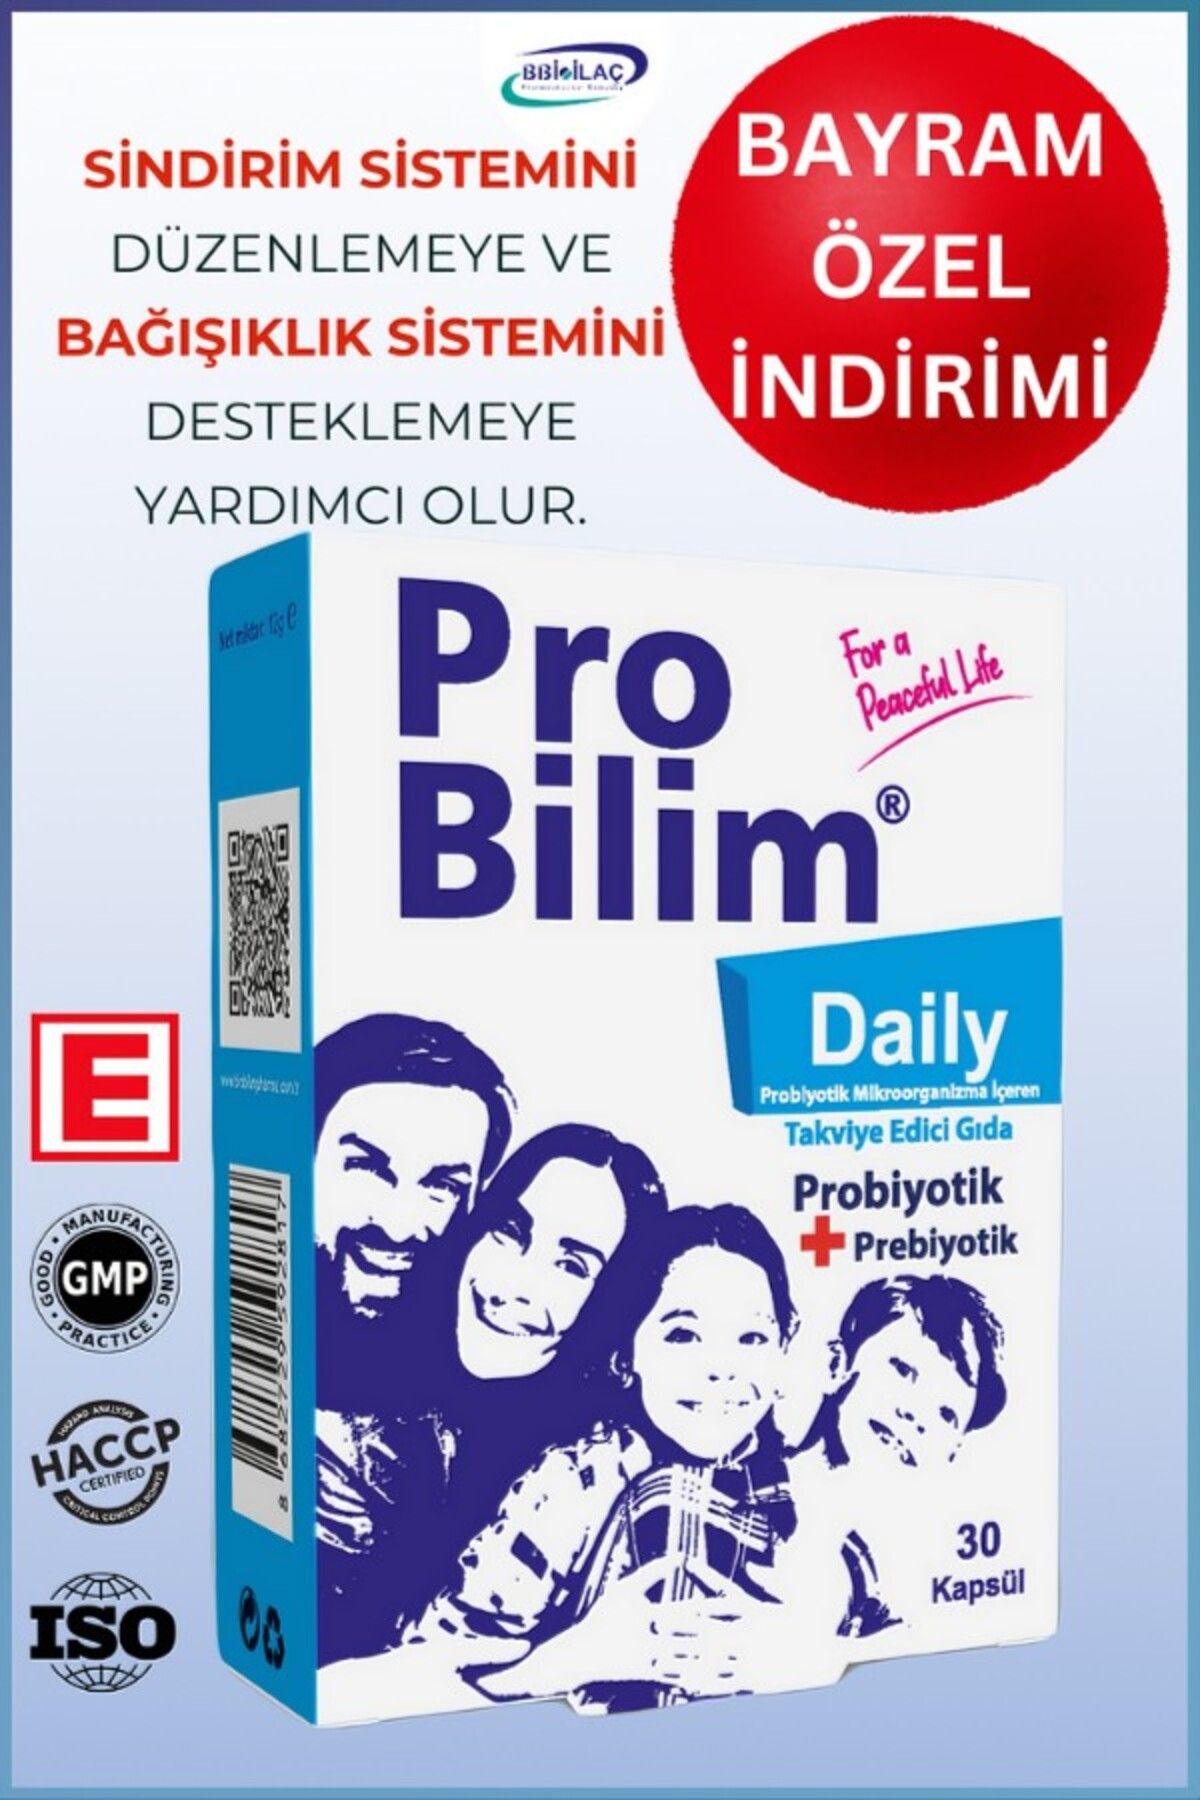 probilim ® Daily Probiyotik, Prebiyotik, 30 Kapsül , Günlük Probioyotik